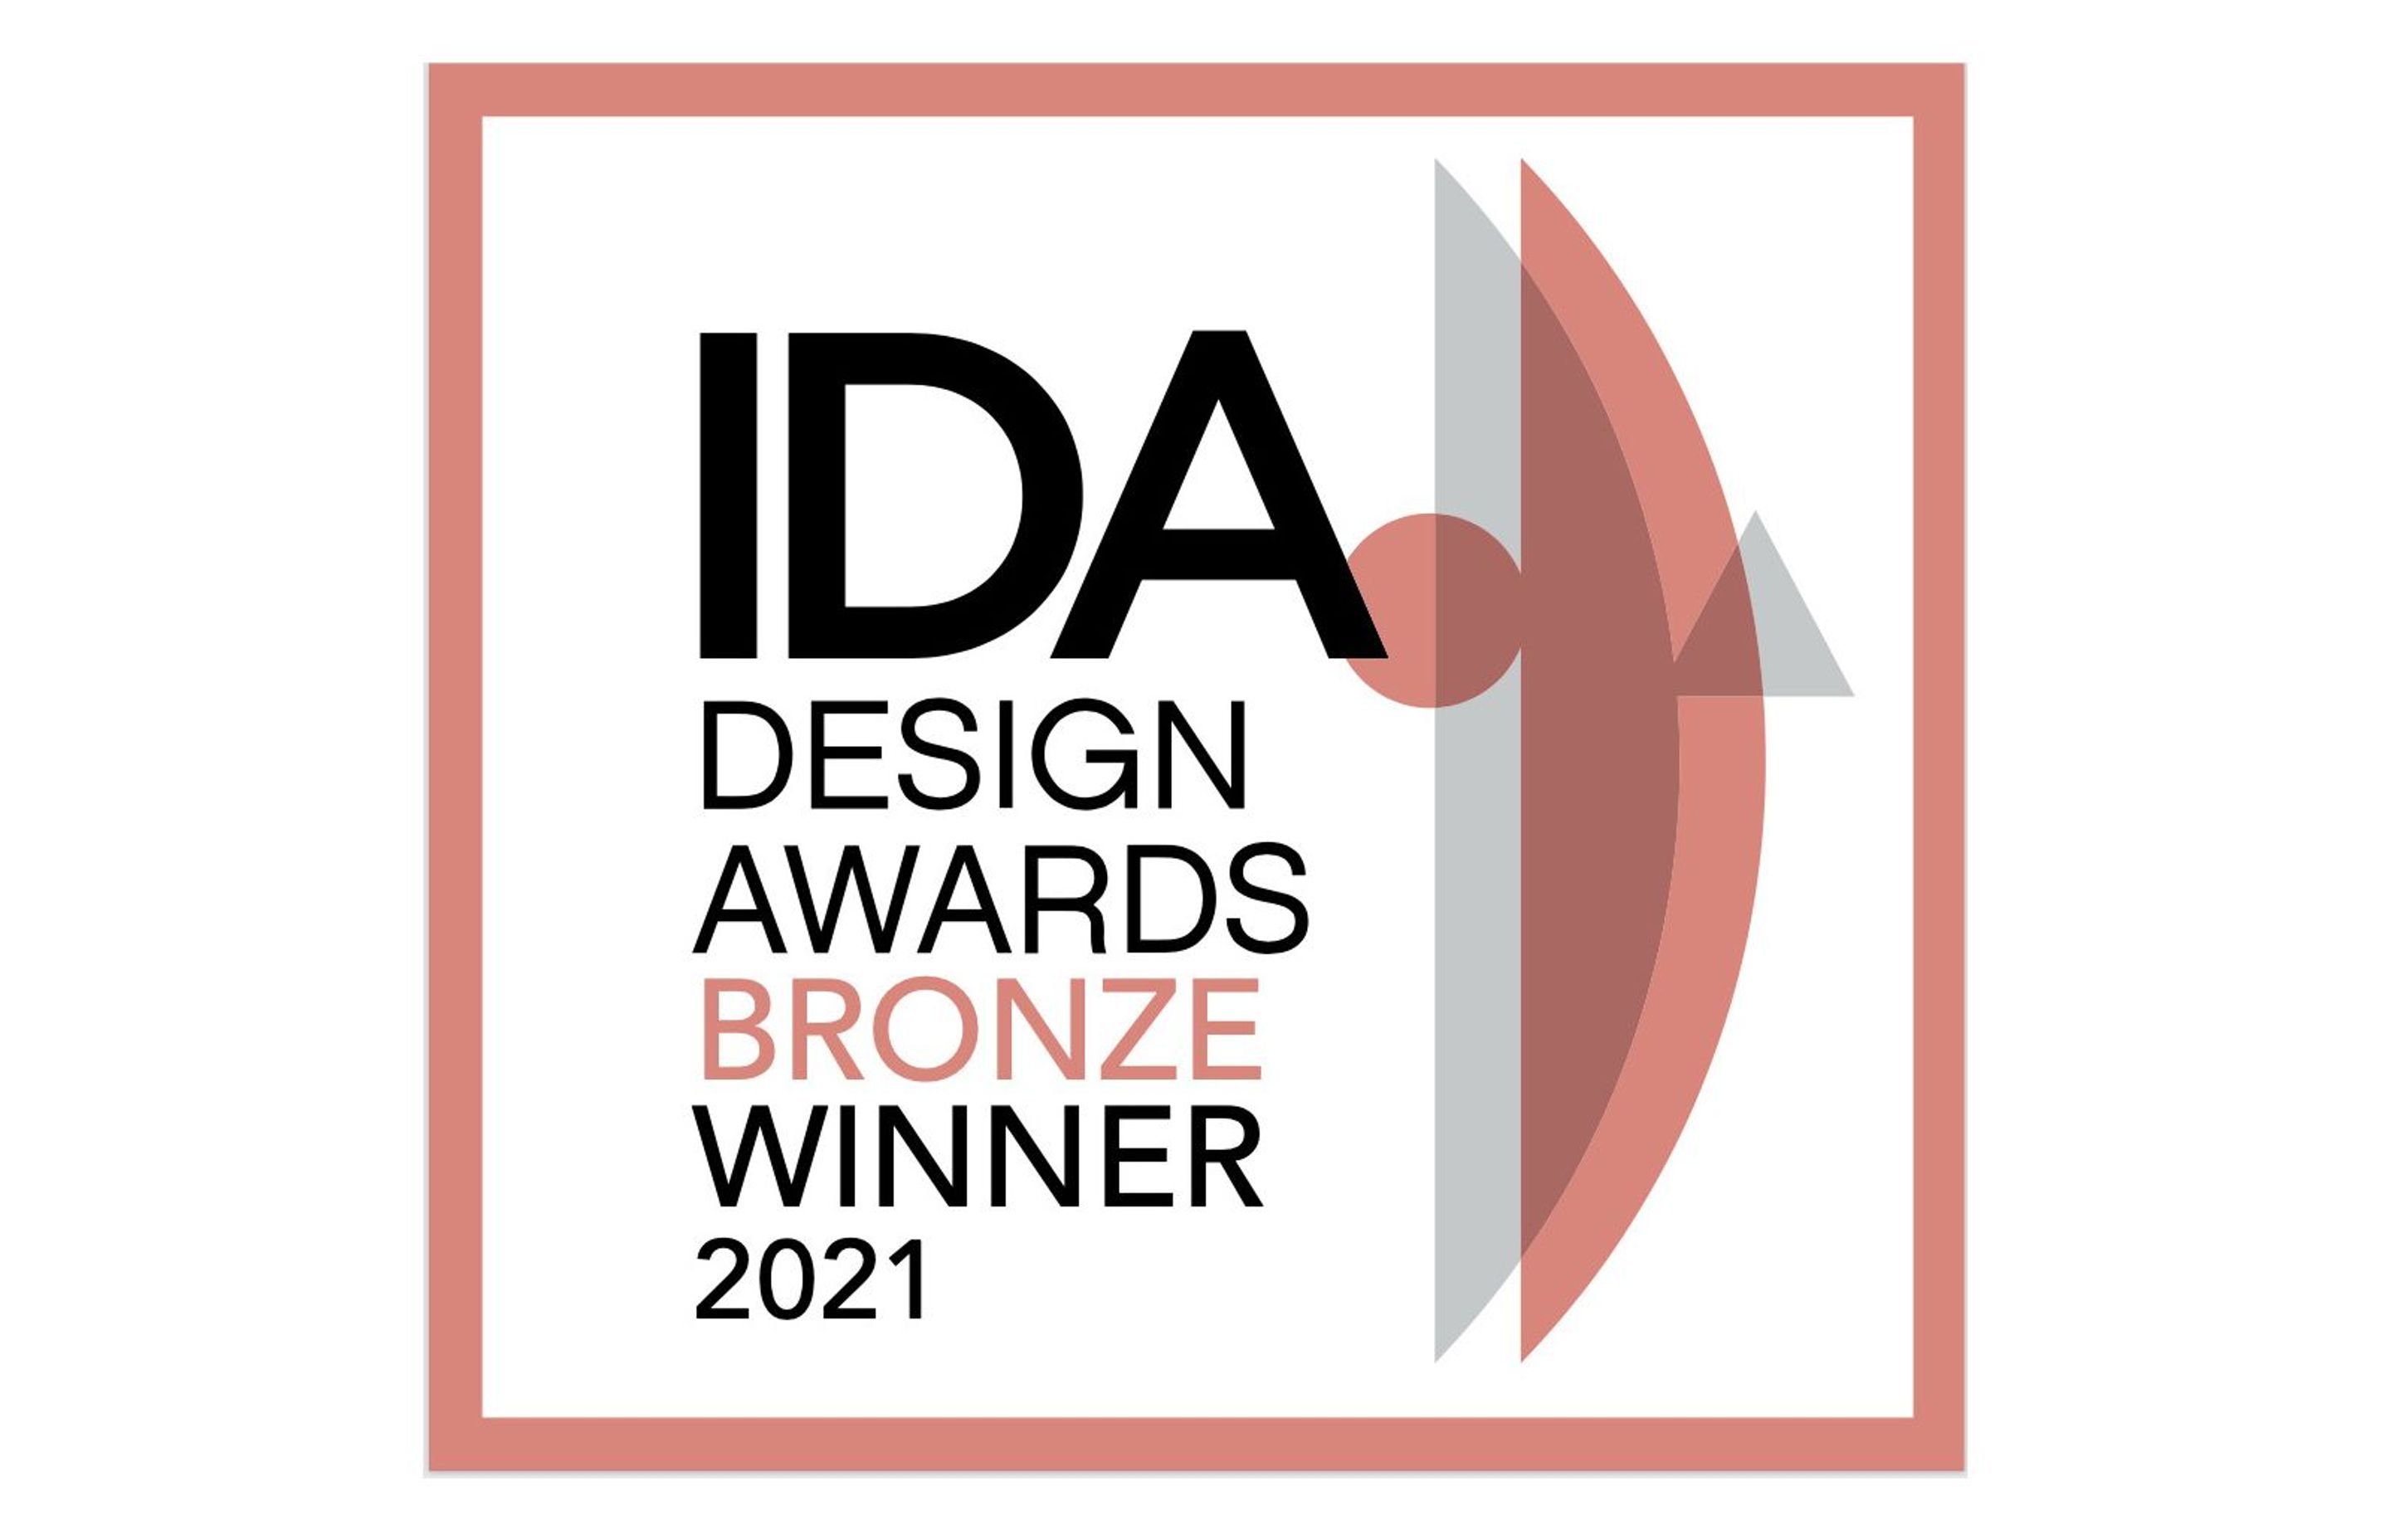 IDA Design Awards Bronze Winner 2021